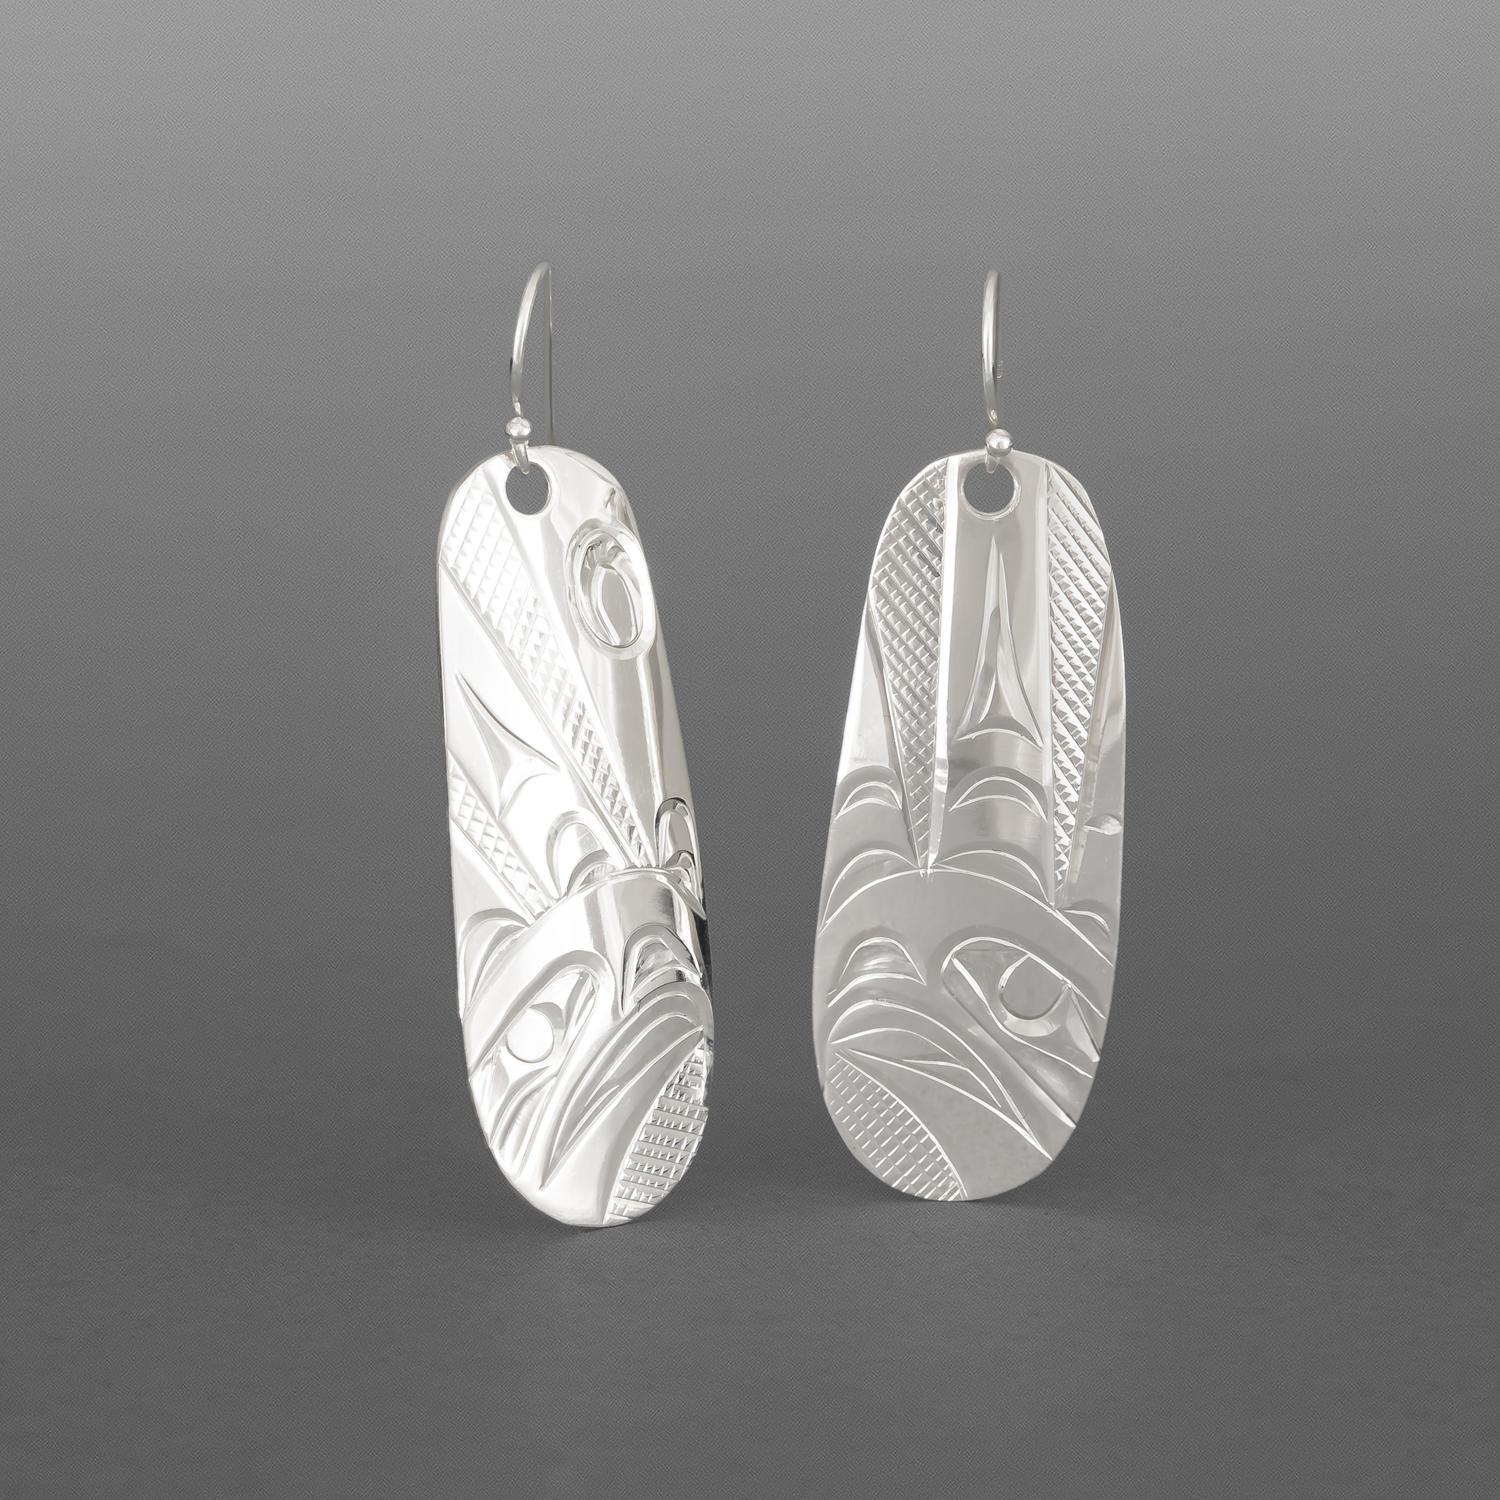 Eagle in Sunlight Earrings
Corrine Hunt
Kwakwaka'wakw/Tlingit
Sterling silver
1½" x ½
$275